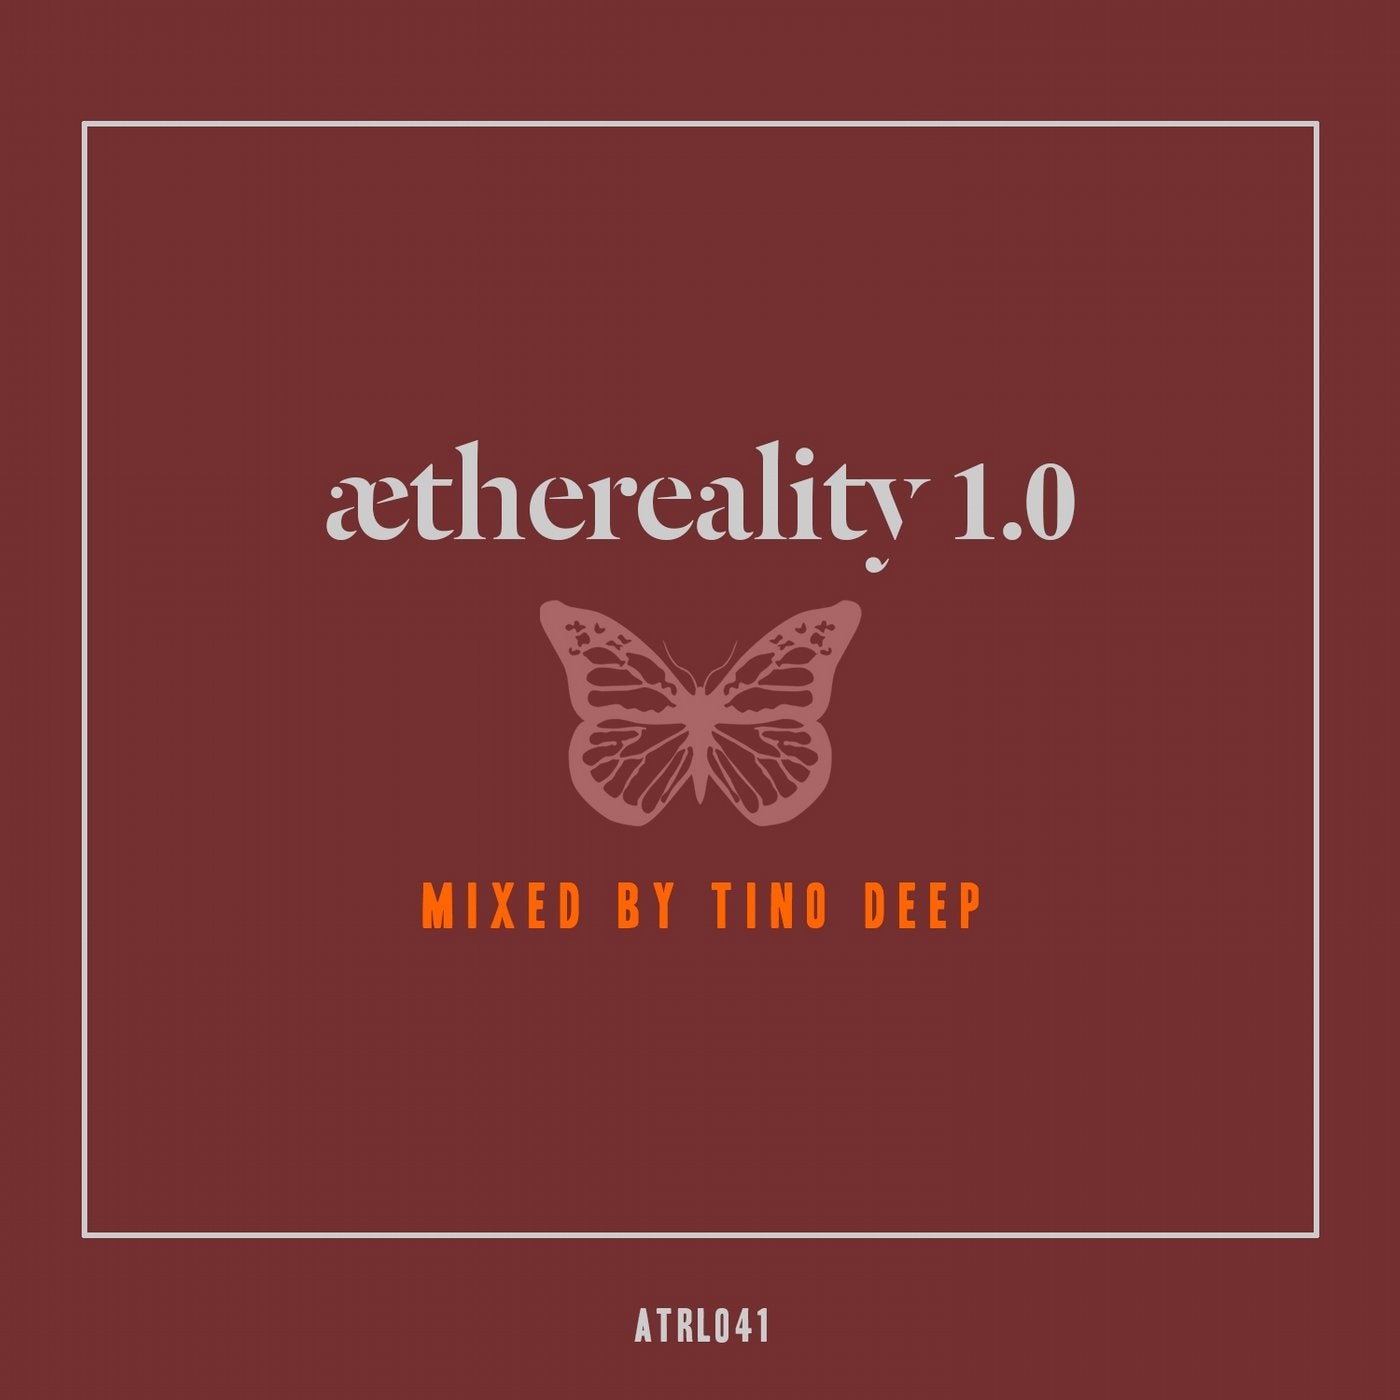 Aethereality 1.0